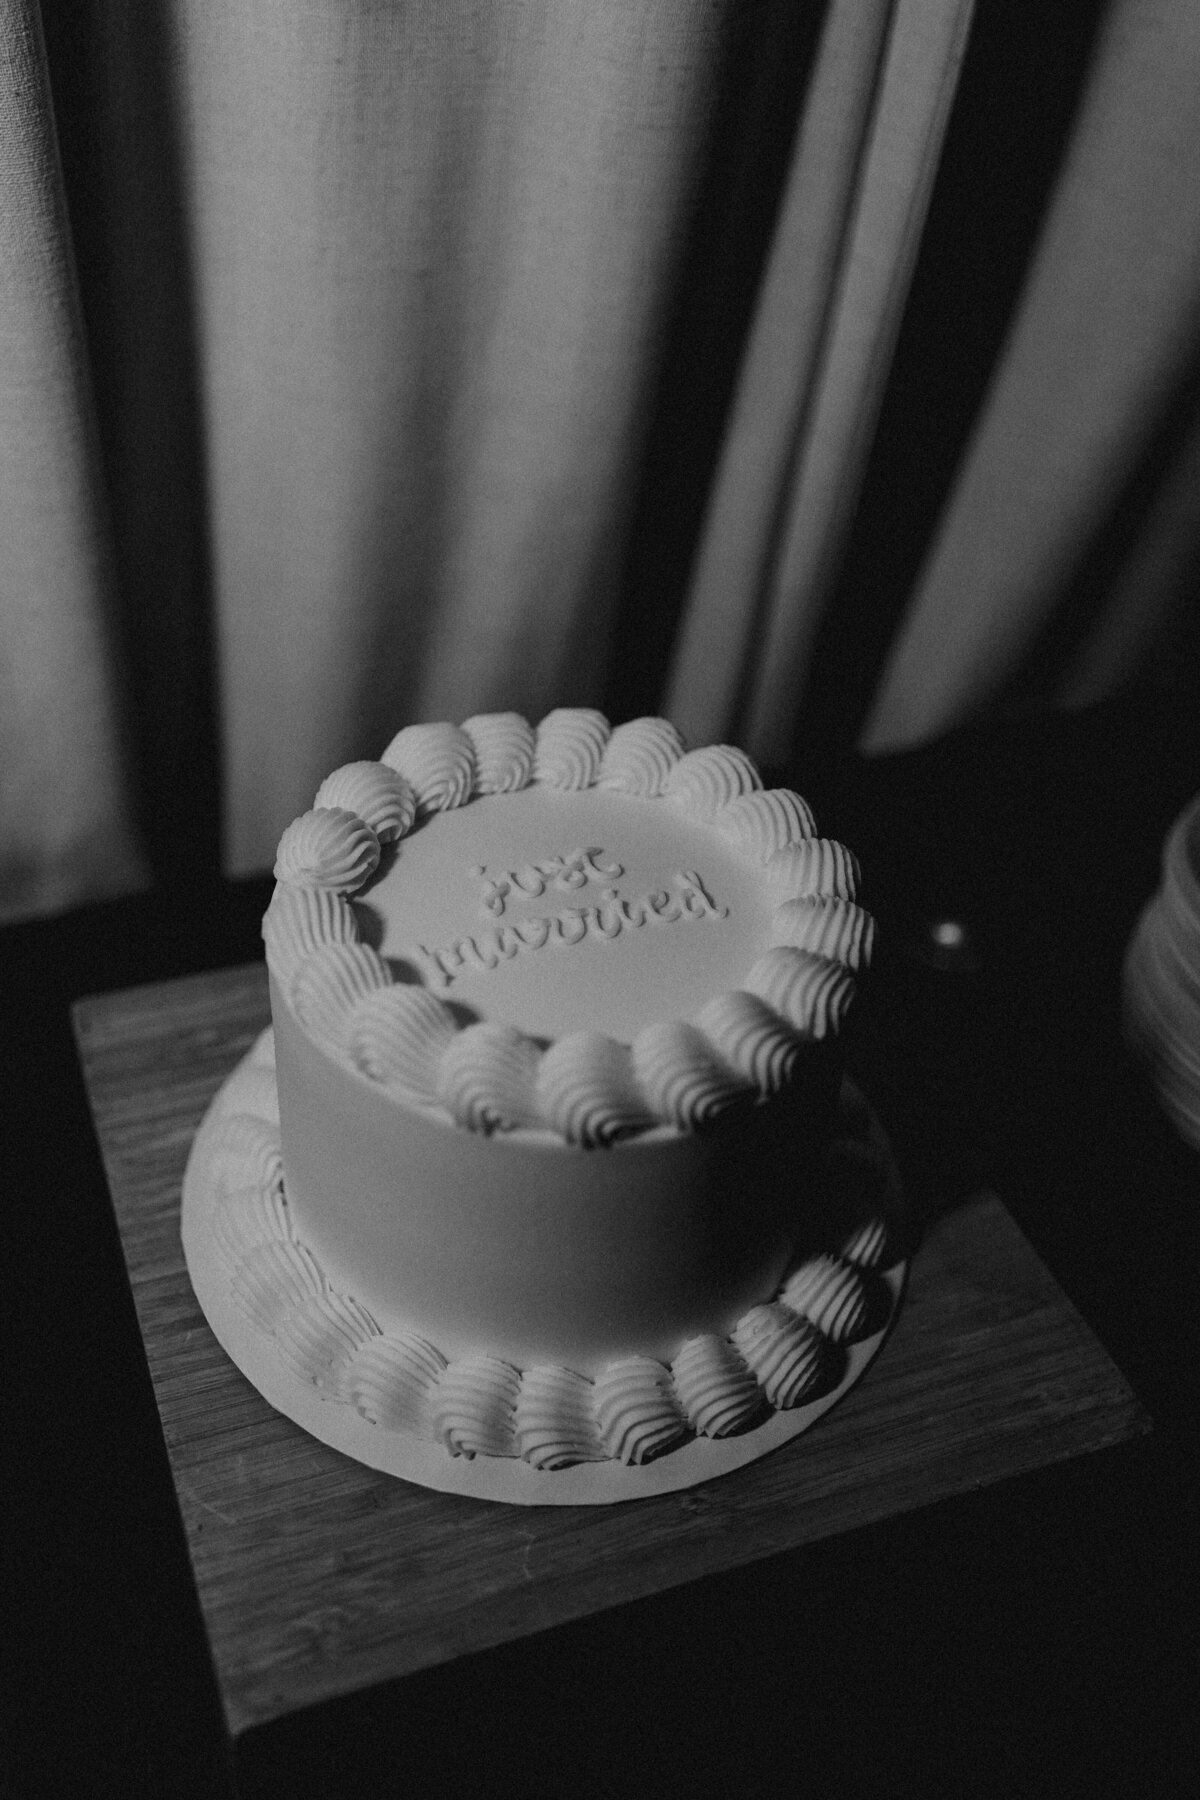 Wedding cake at Proper hotel wedding reception